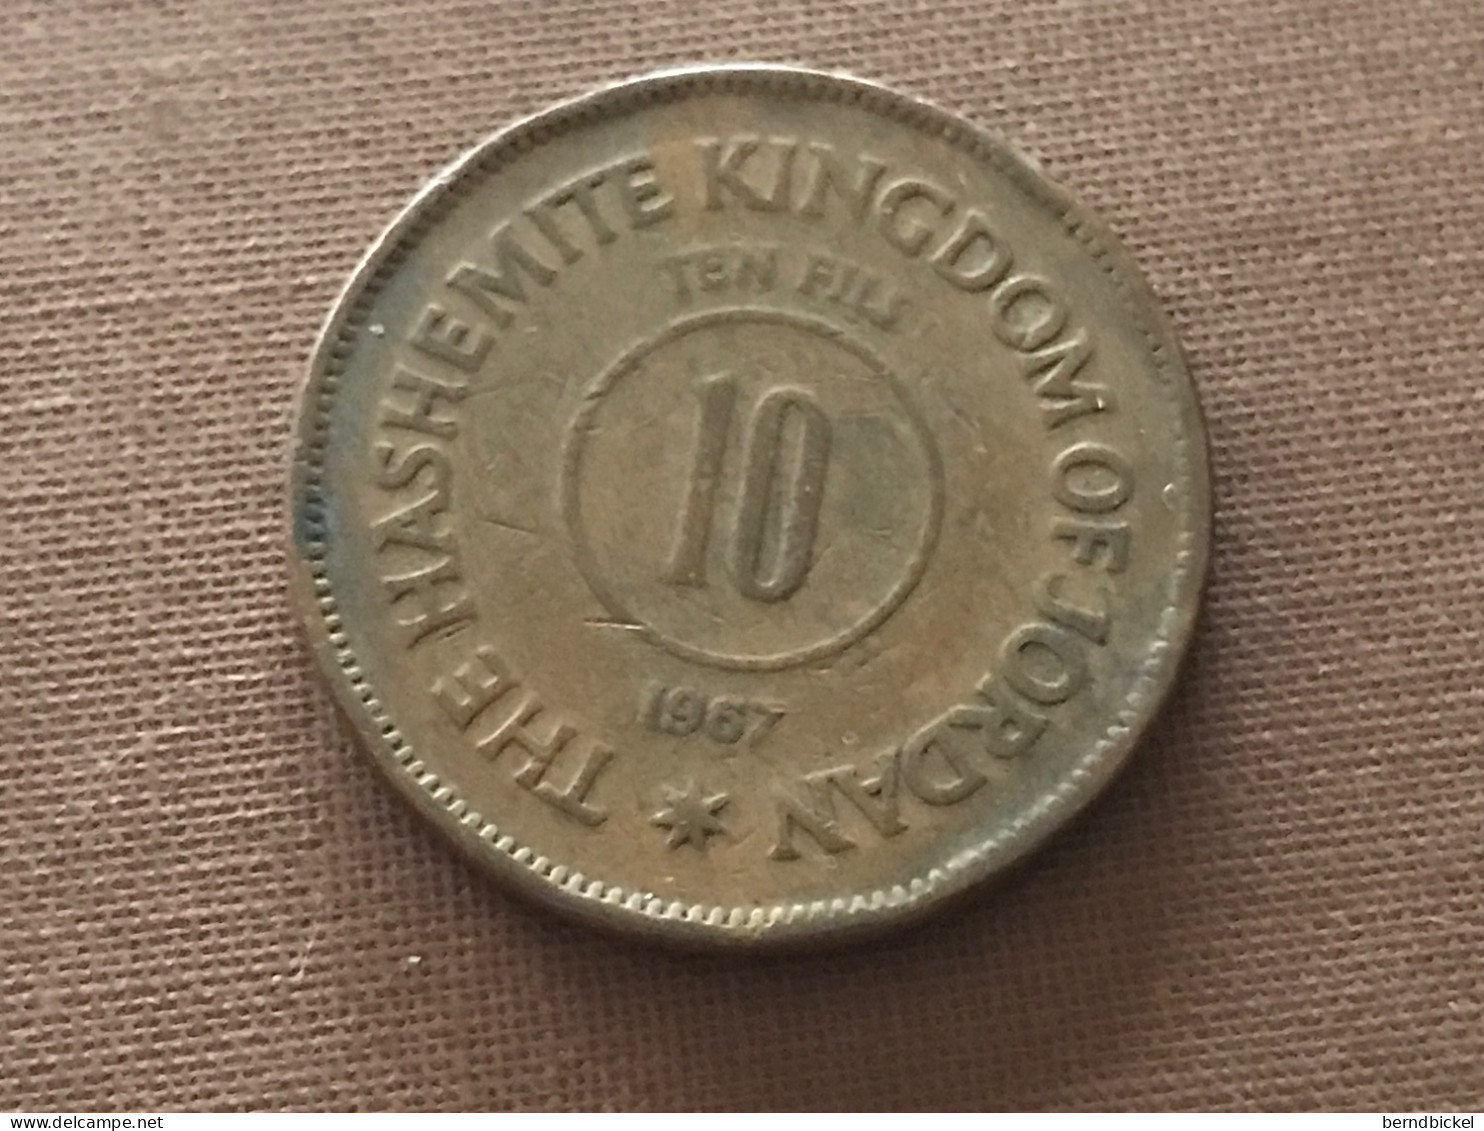 Münze Münzen Umlaufmünze Jordanien 10 Fils 1967 - Jordanien